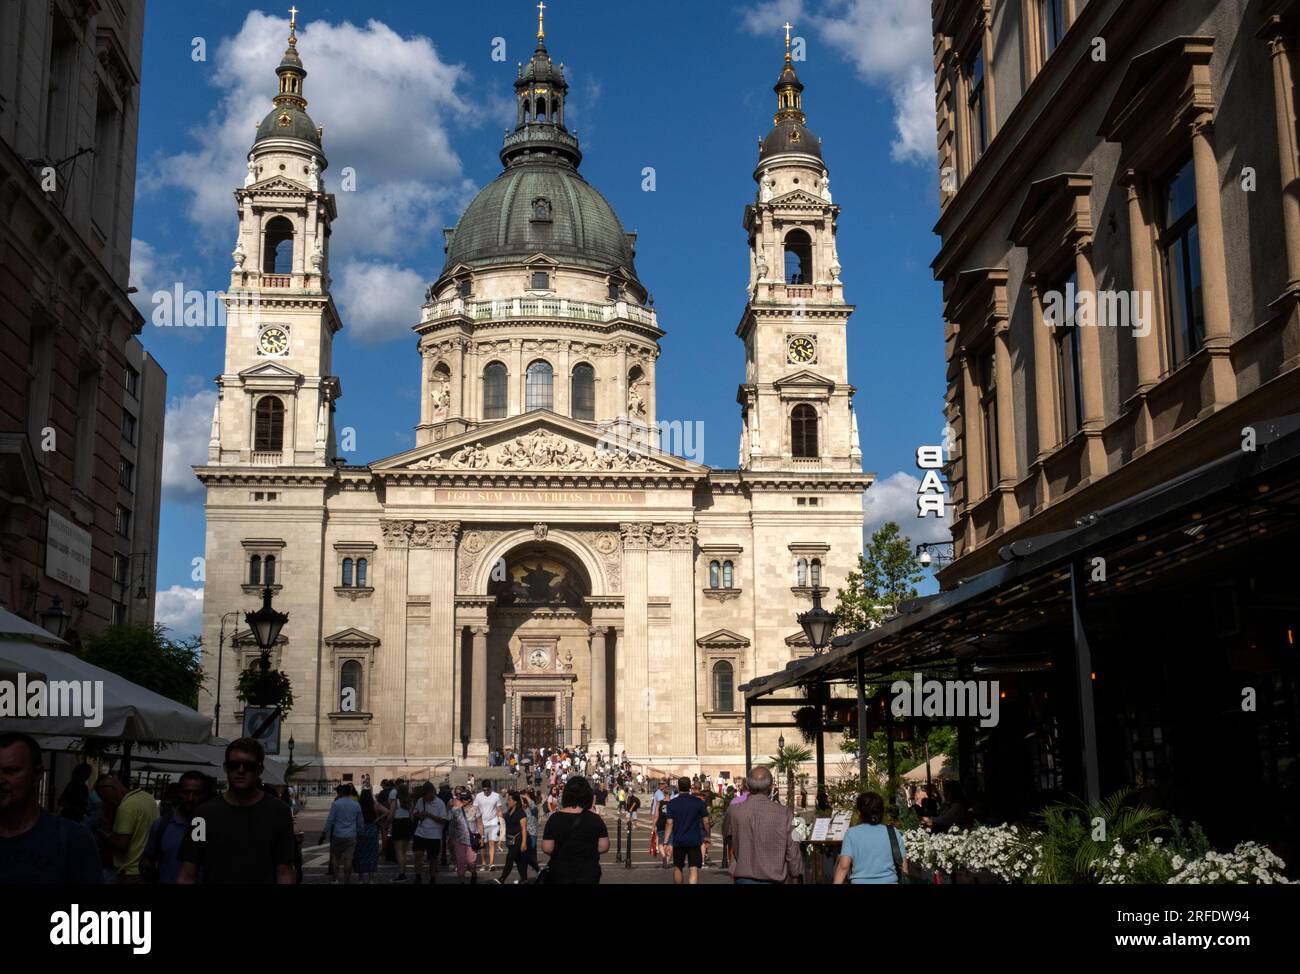 St. Stephen's Basilica in Budapest Hungary. Stock Photo